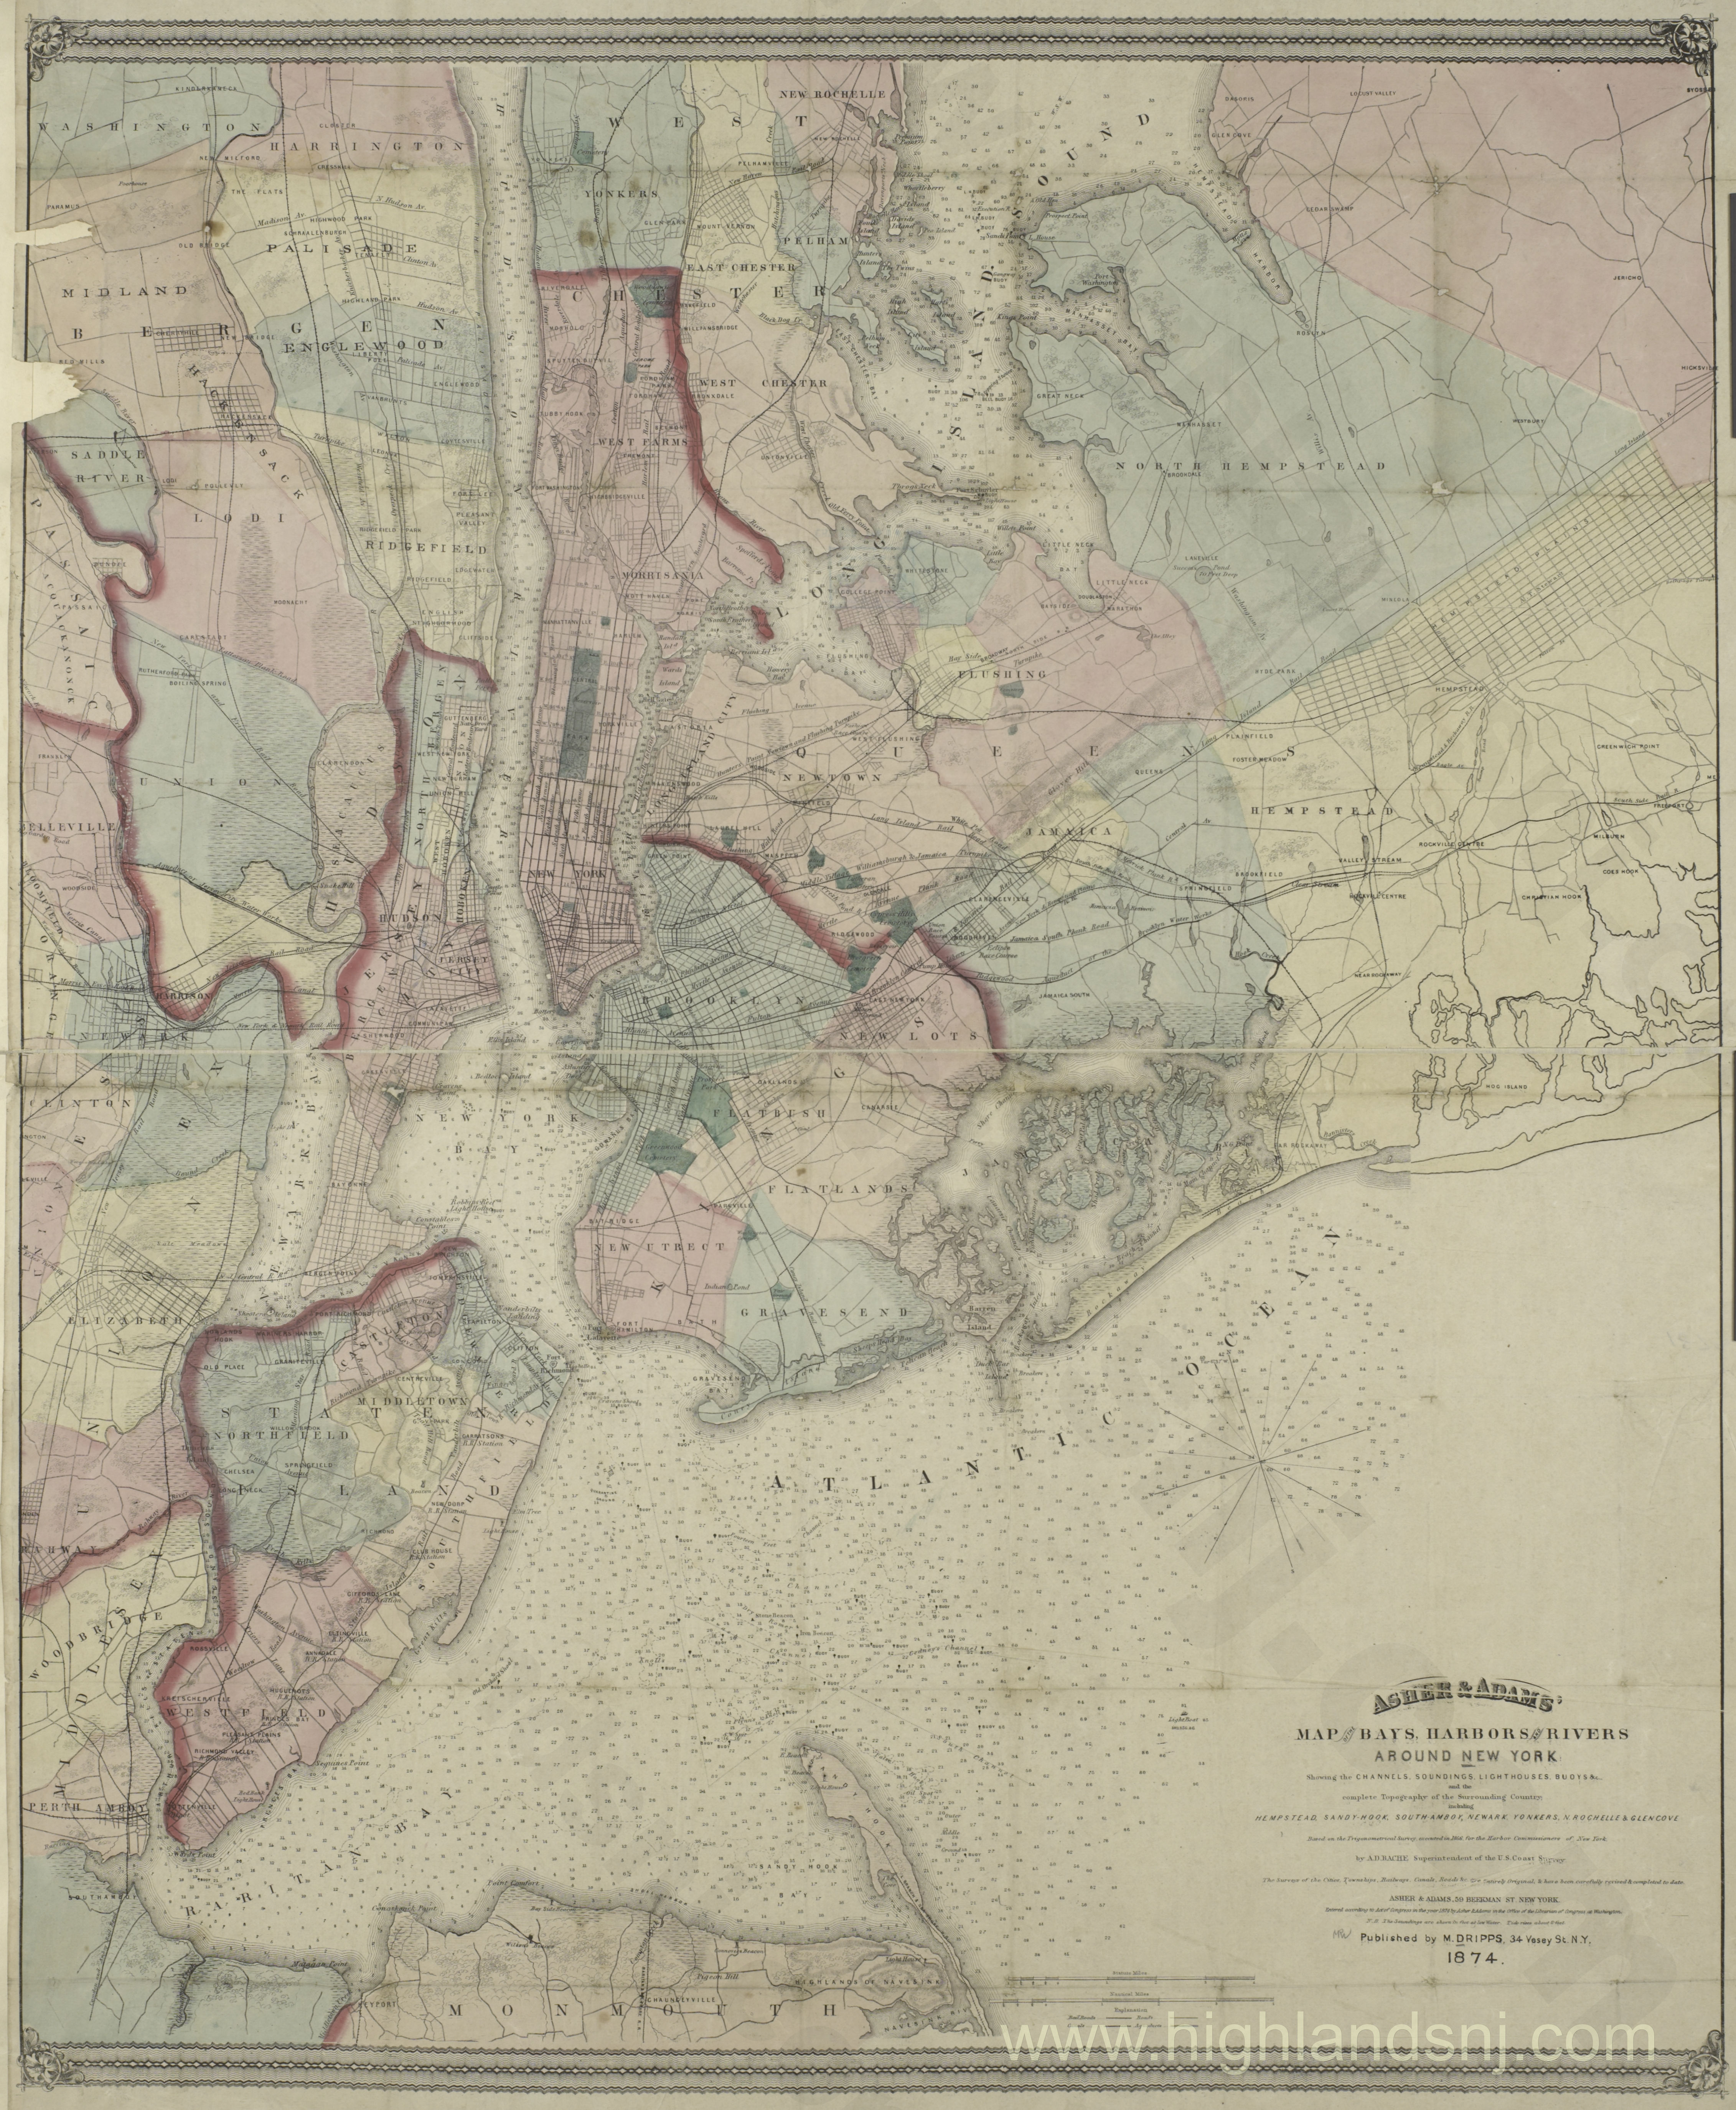 1874 Map of the bays harbors and rivers around New York